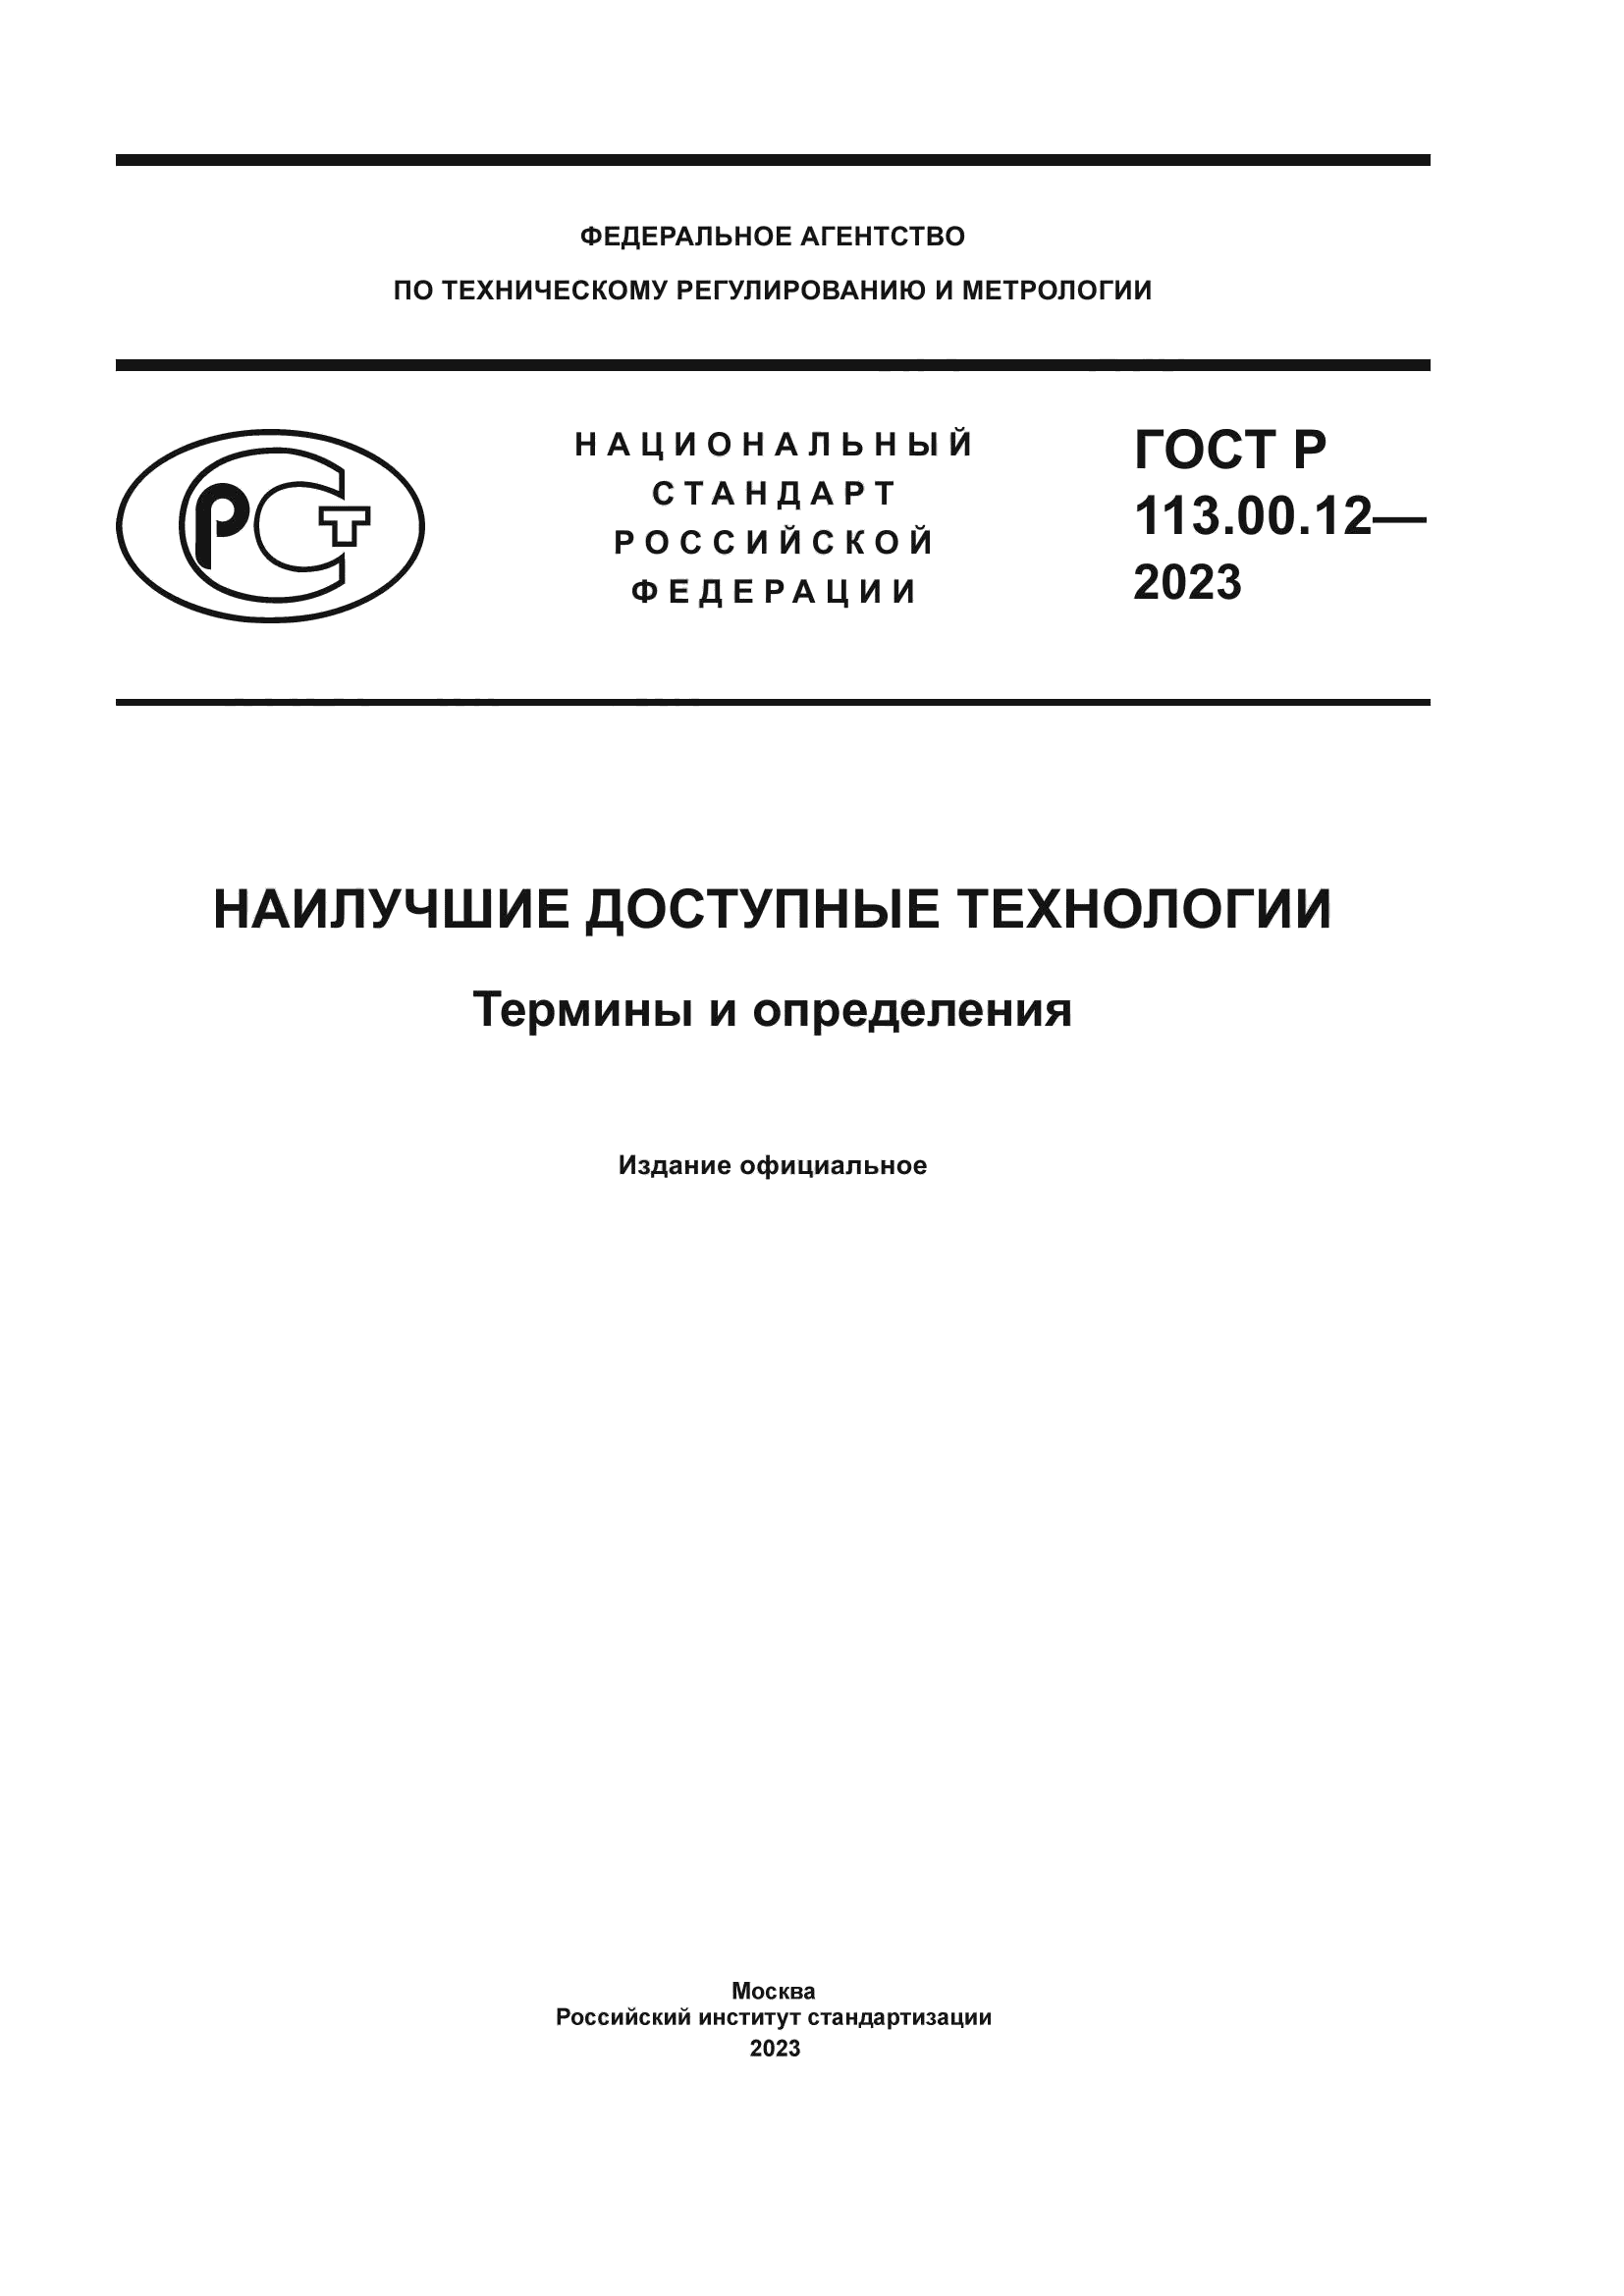 ГОСТ Р 113.00.12-2023